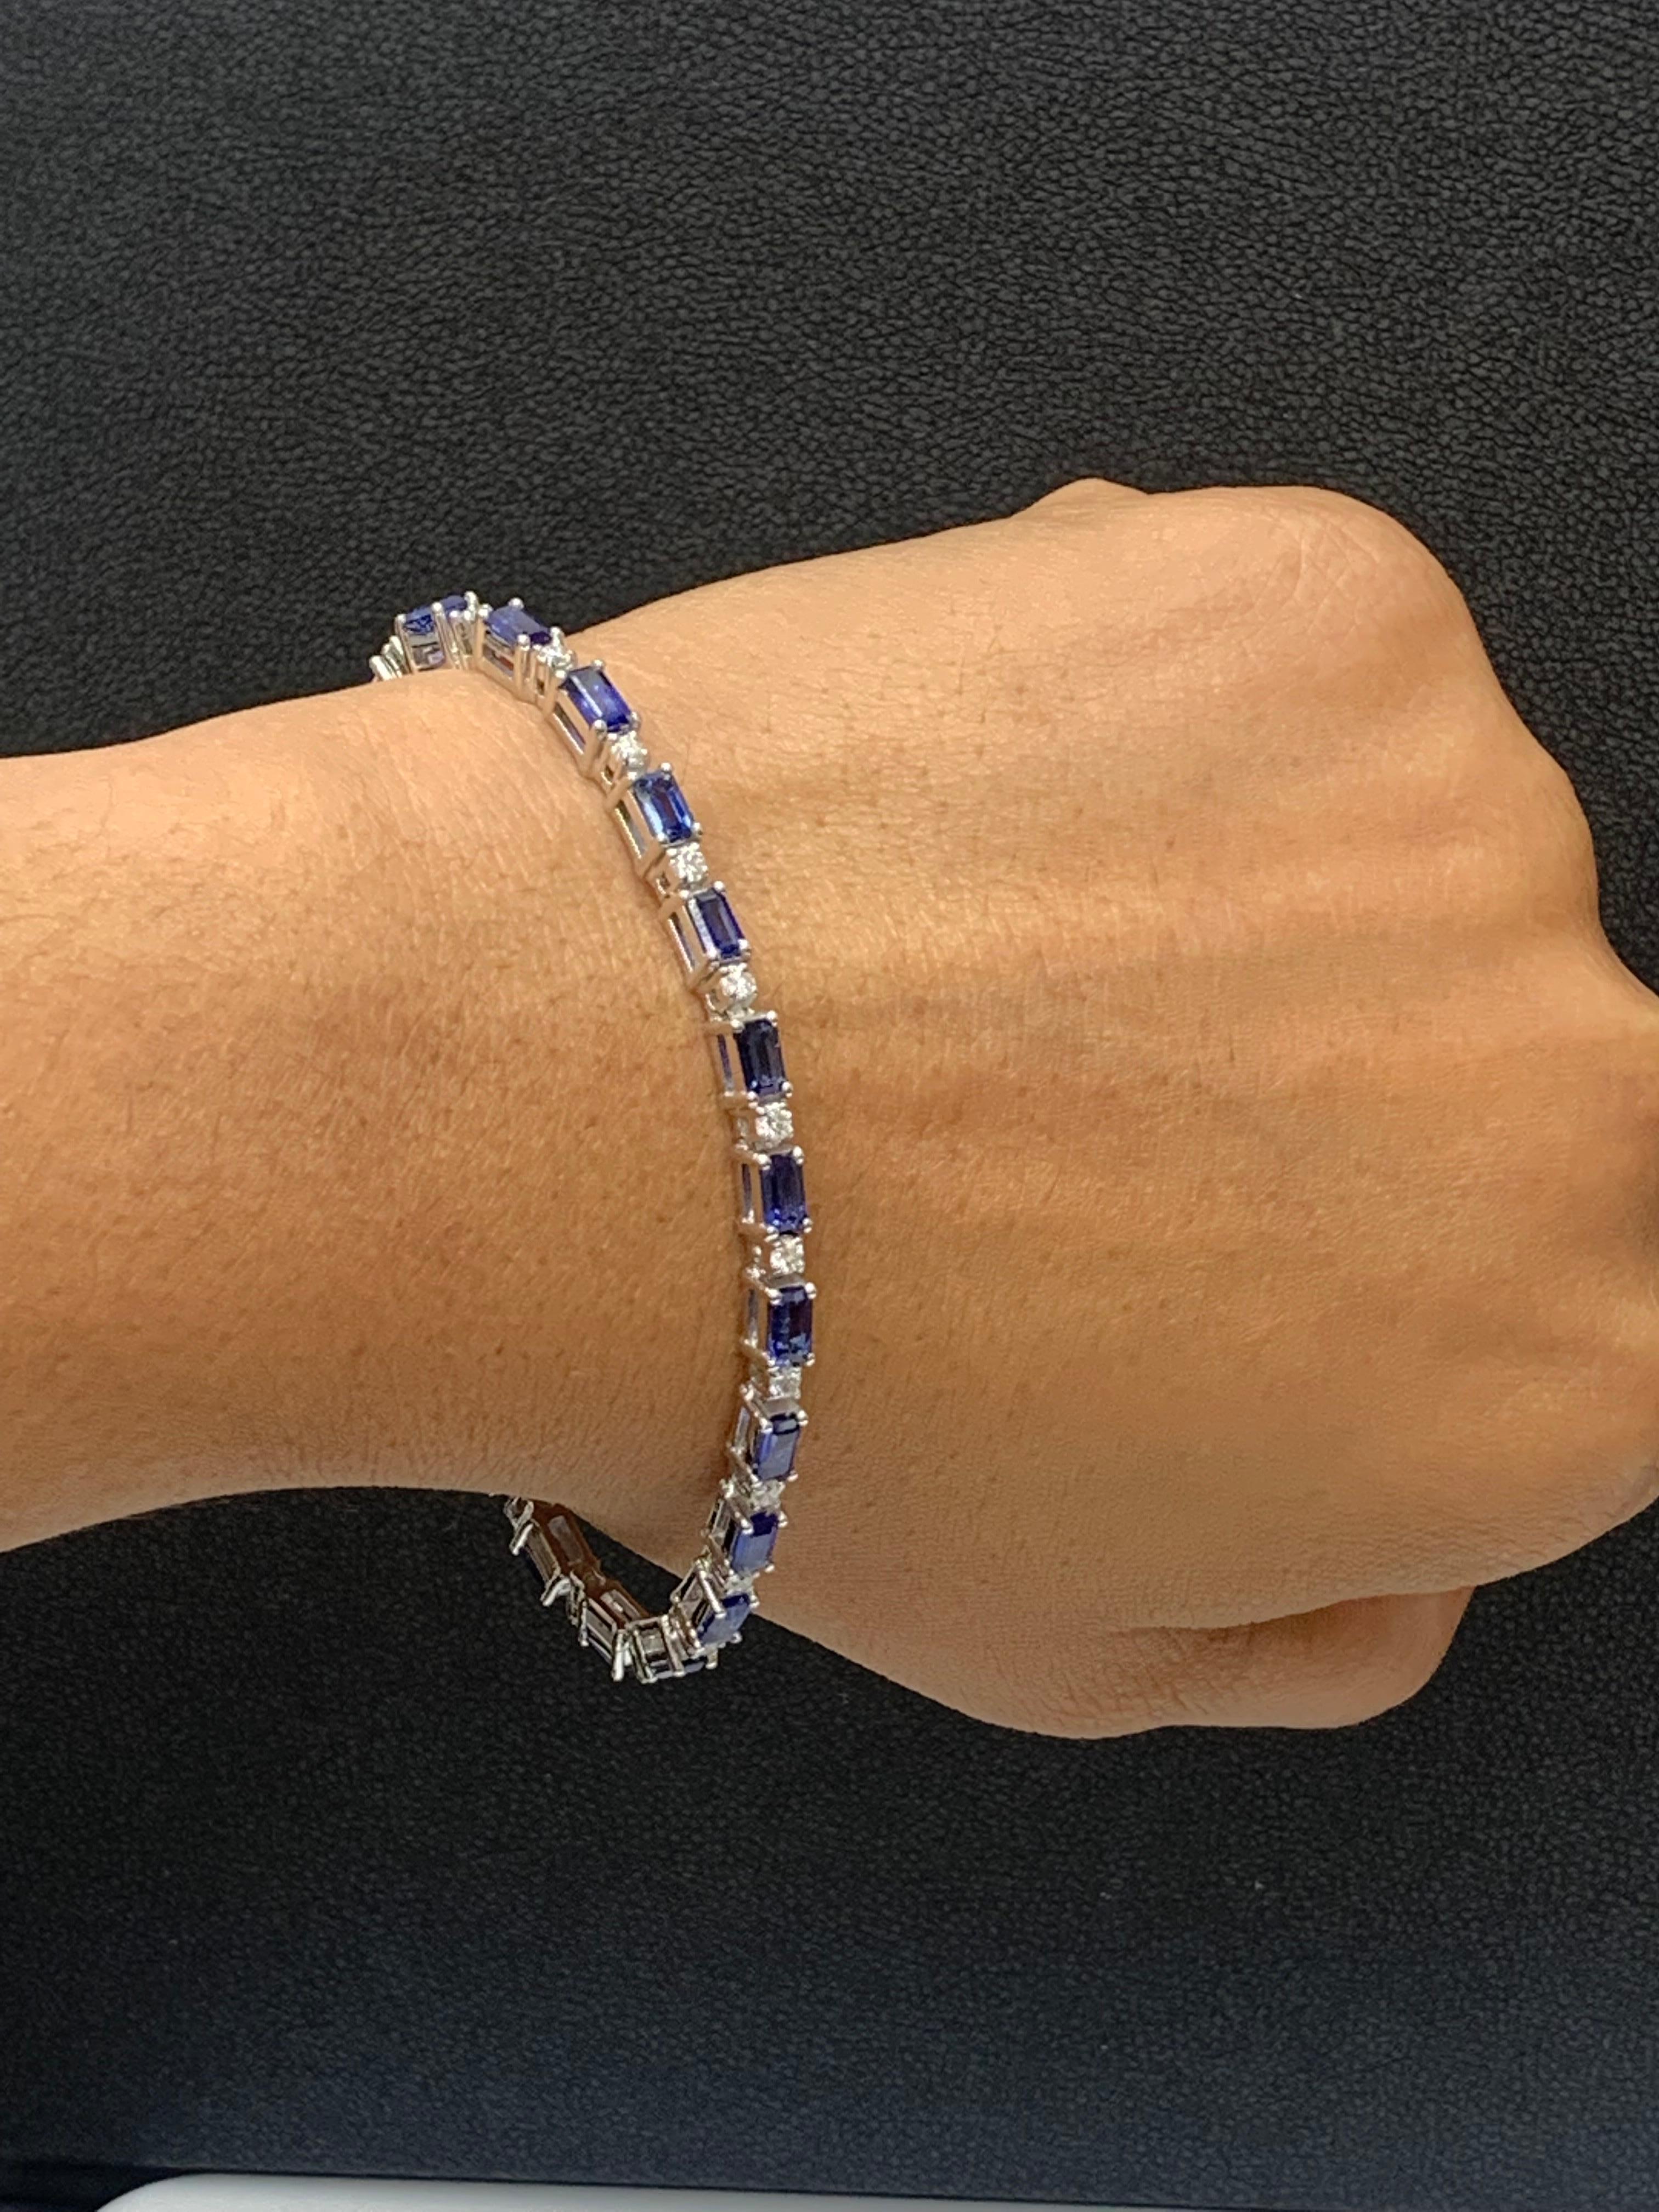 Modern 7.17 Carat Emerald Cut Blue Sapphire and Diamond Bracelet in 14K White Gold For Sale